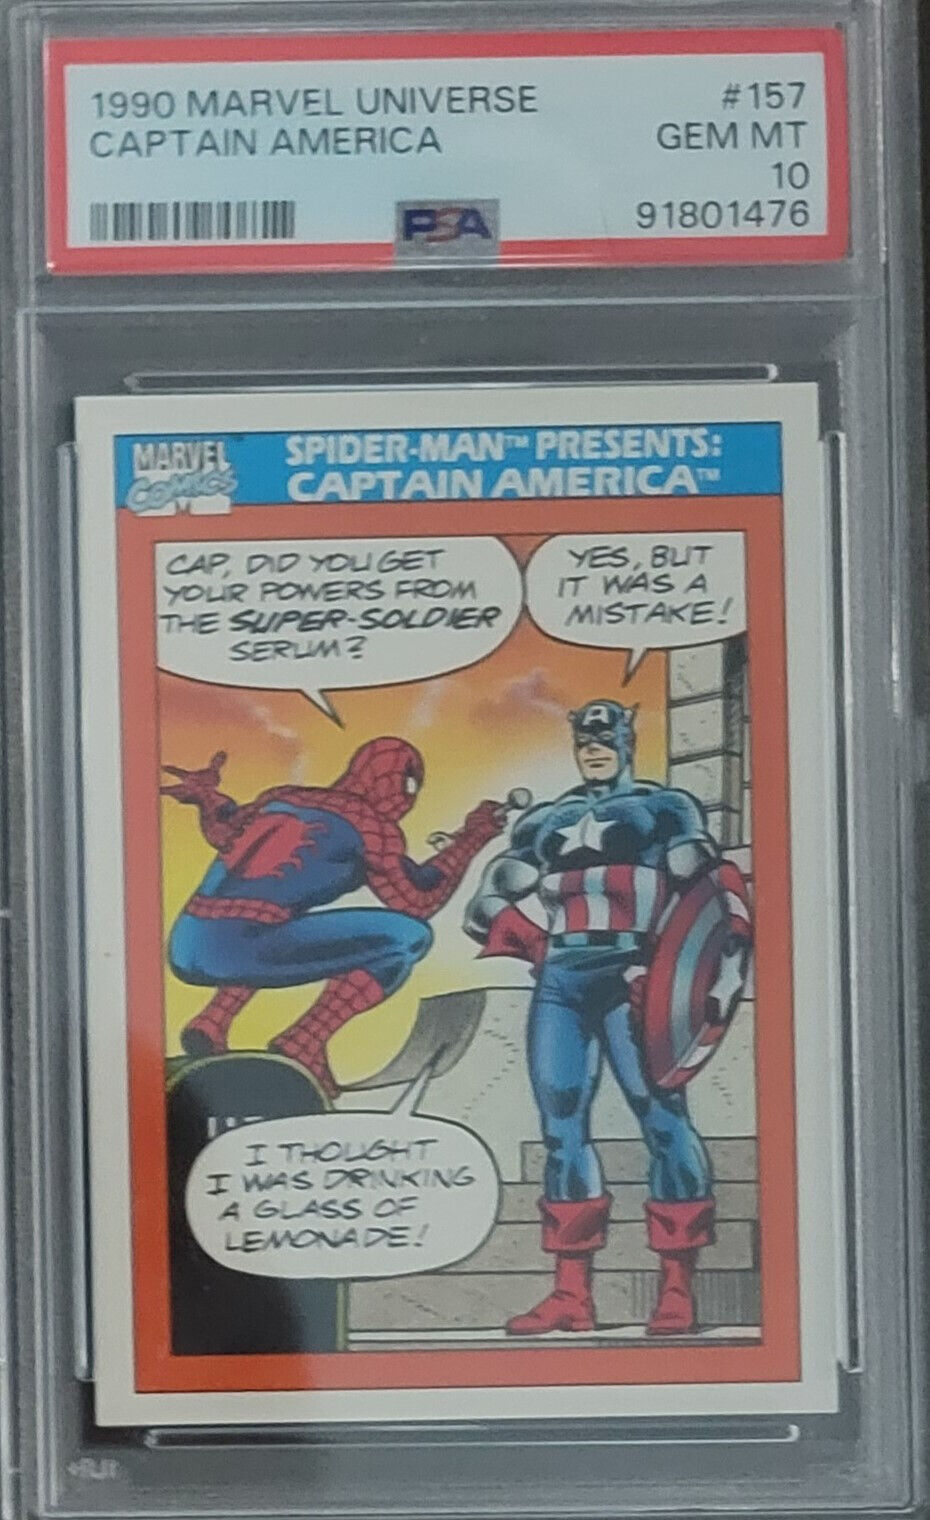 1990 Marvel Universe #157 Spider-Man Presents Captain America PSA 10 GEM MINT